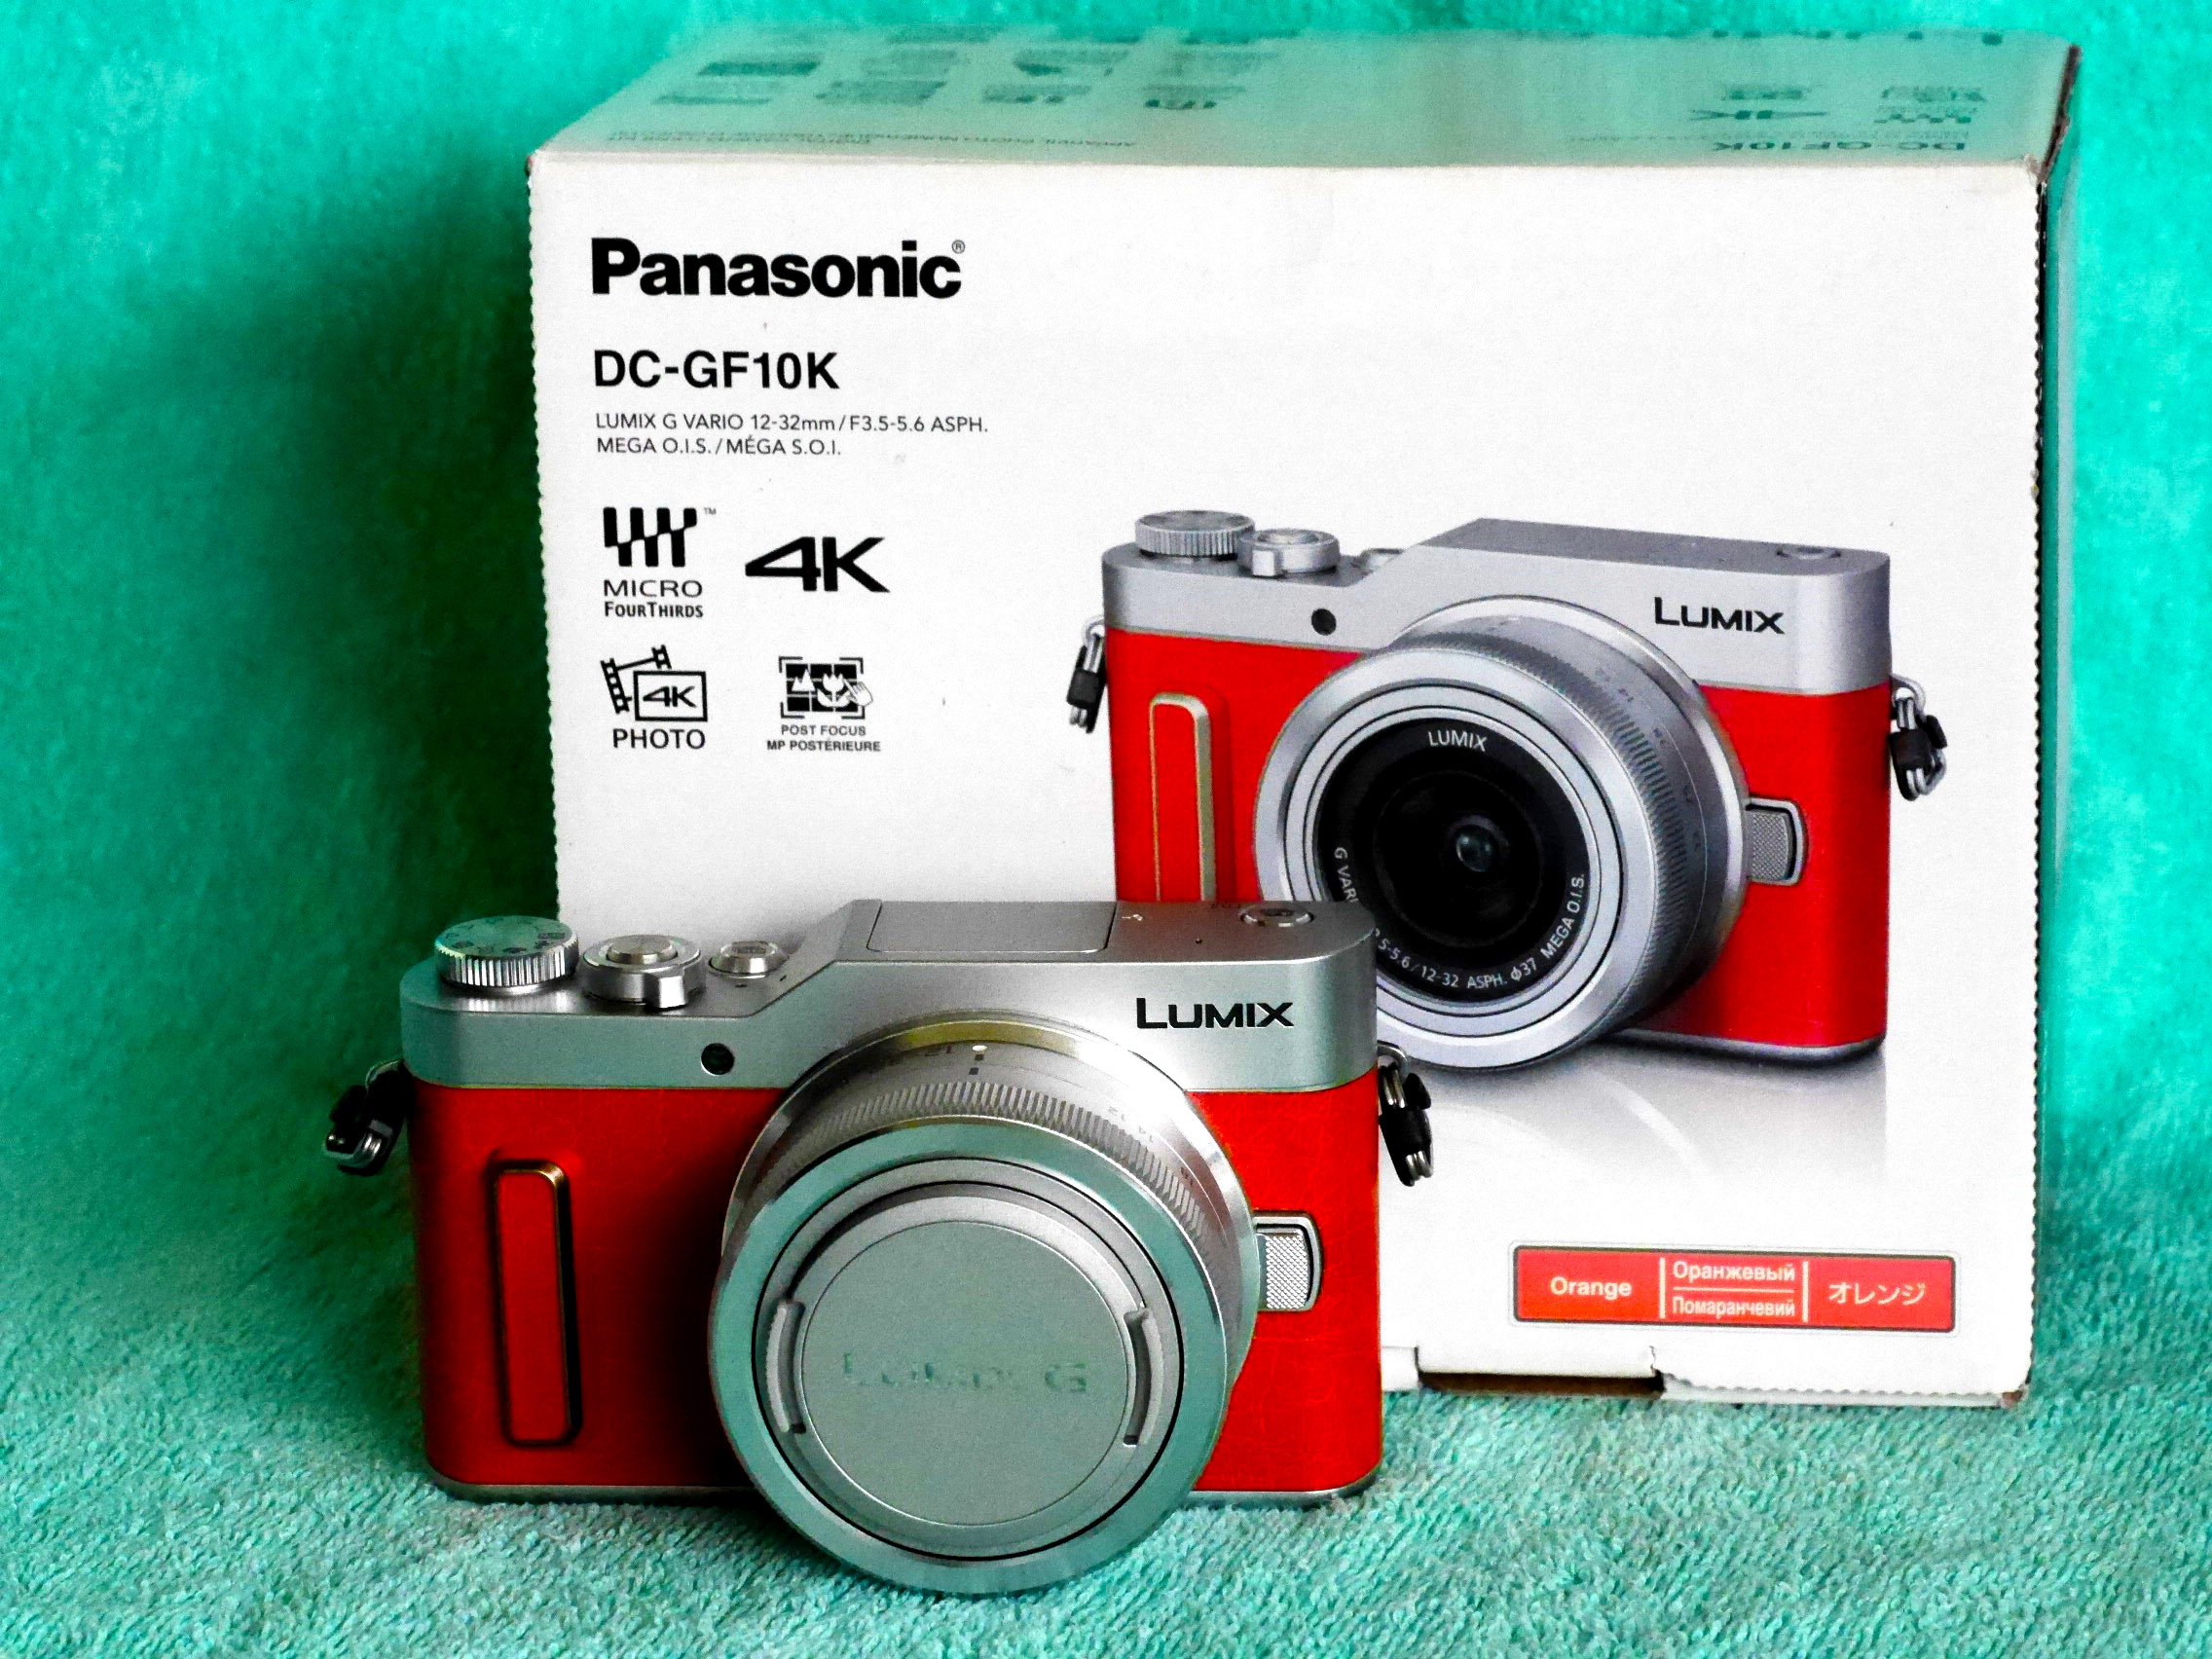 Panasonic DC-GF10 / GX880 Orange camera kit 12-32mm lens in Box GF10 4K Video